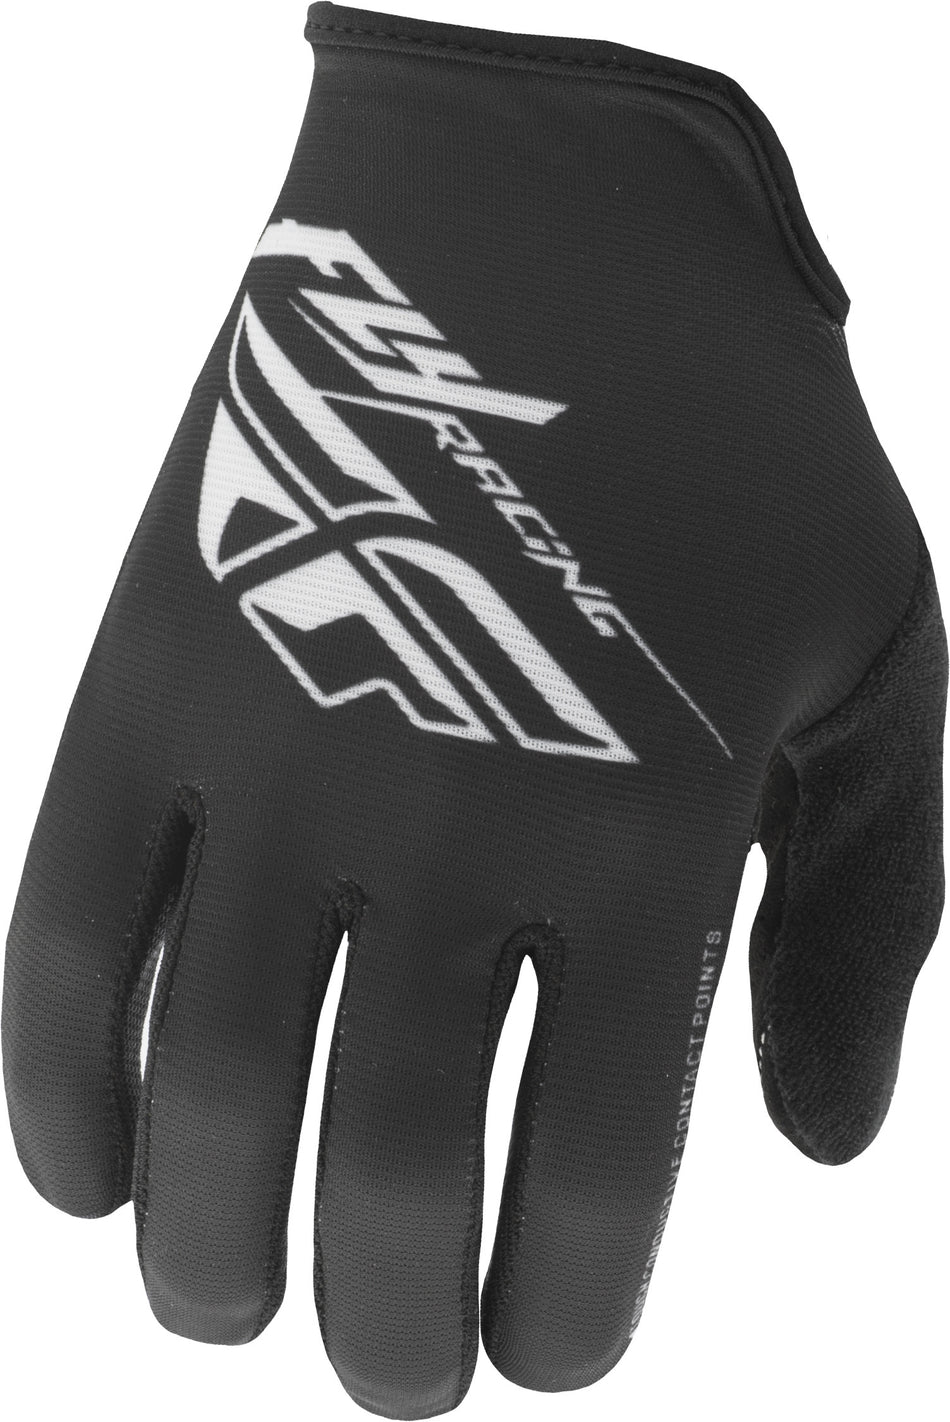 FLY RACING Media Gloves Black Sz 09 350-09009